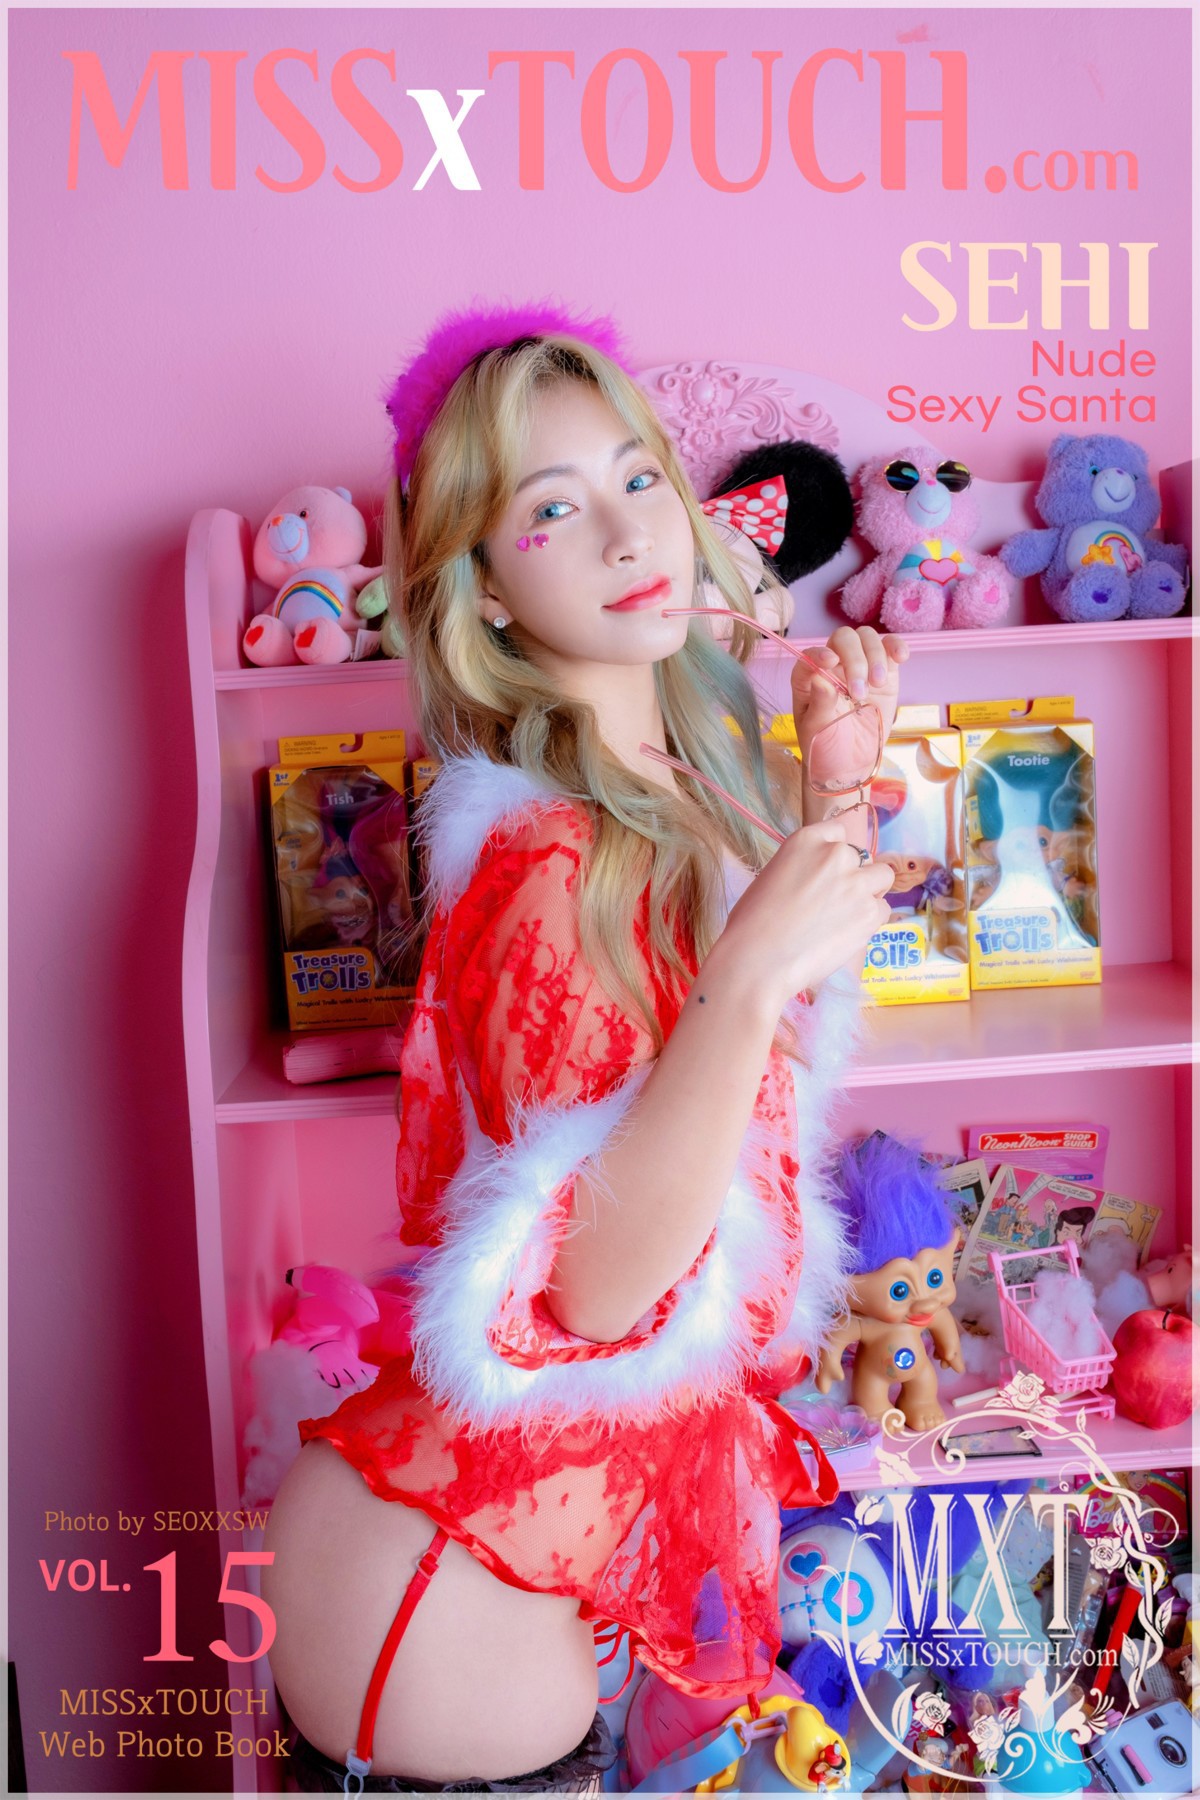 Sehi 세희, MISS TOUCH Vol.15 &#8220;Sexy Santa&#8221; Set.02(1)